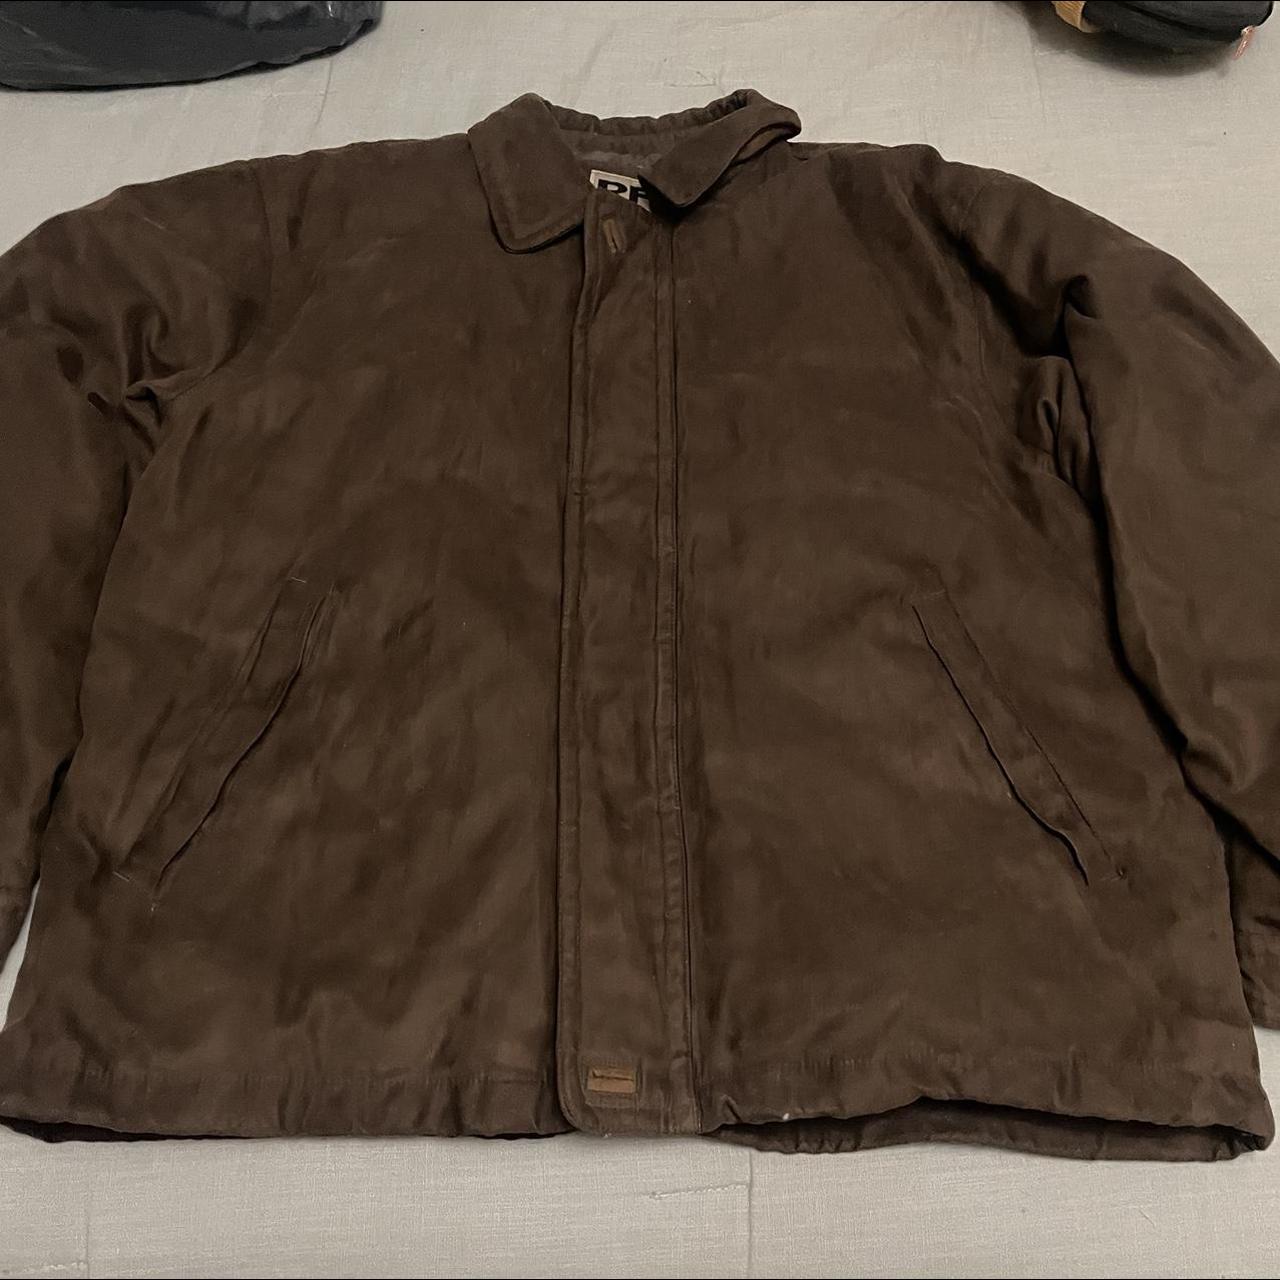 Vintage men’s suede brown jacket Size L No issues at... - Depop